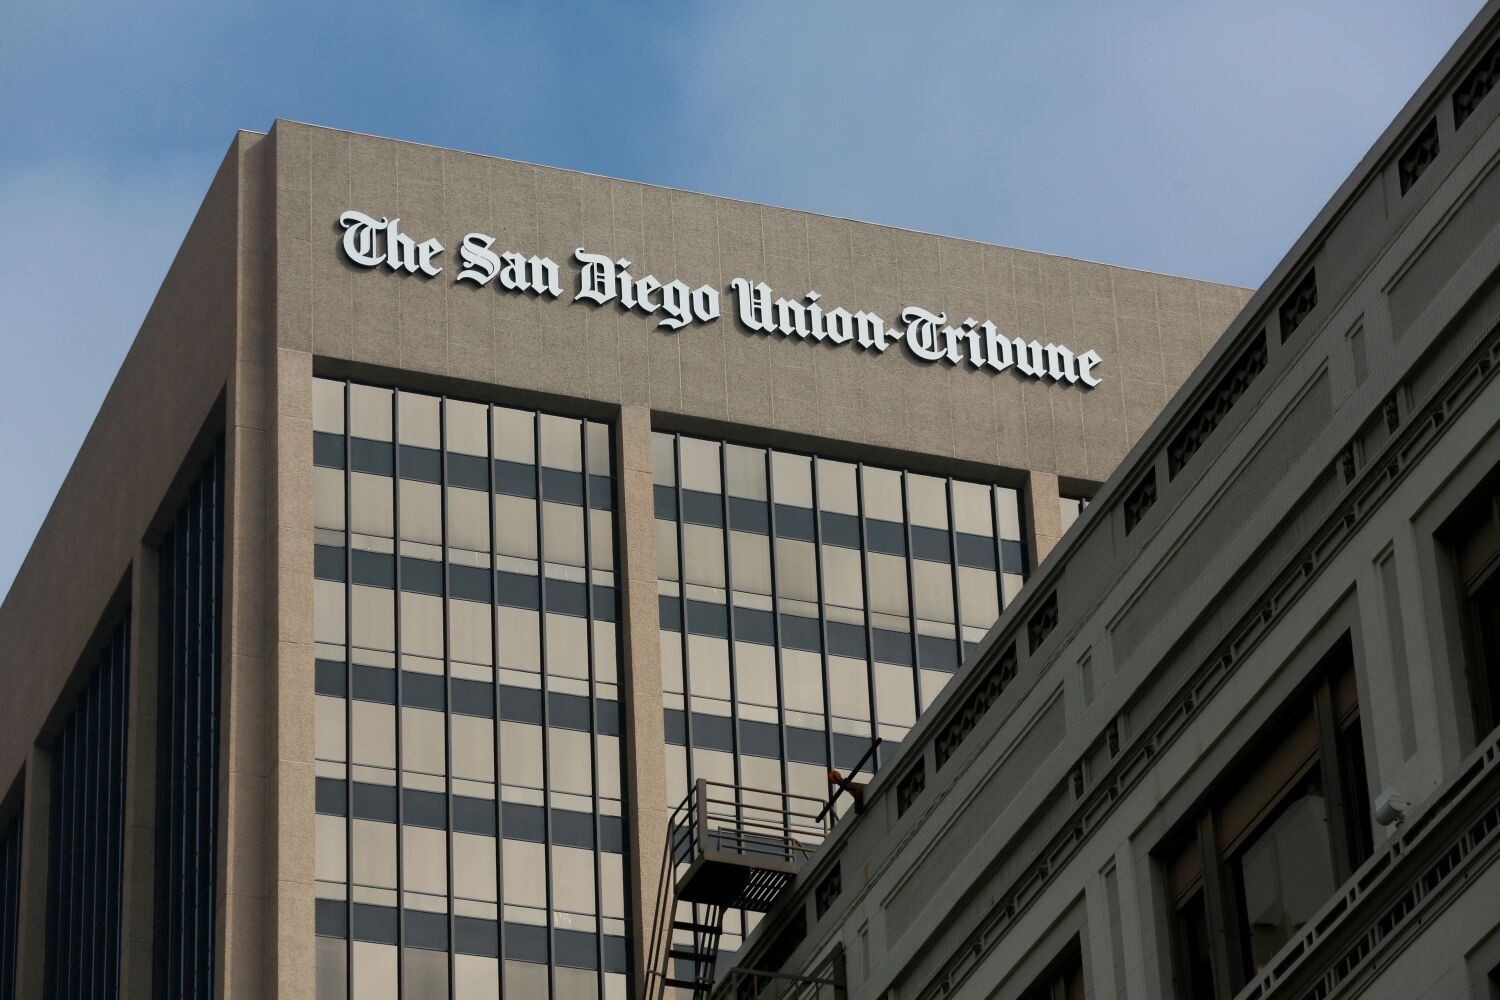 Soon-Shiong family sells San Diego Union-Tribune